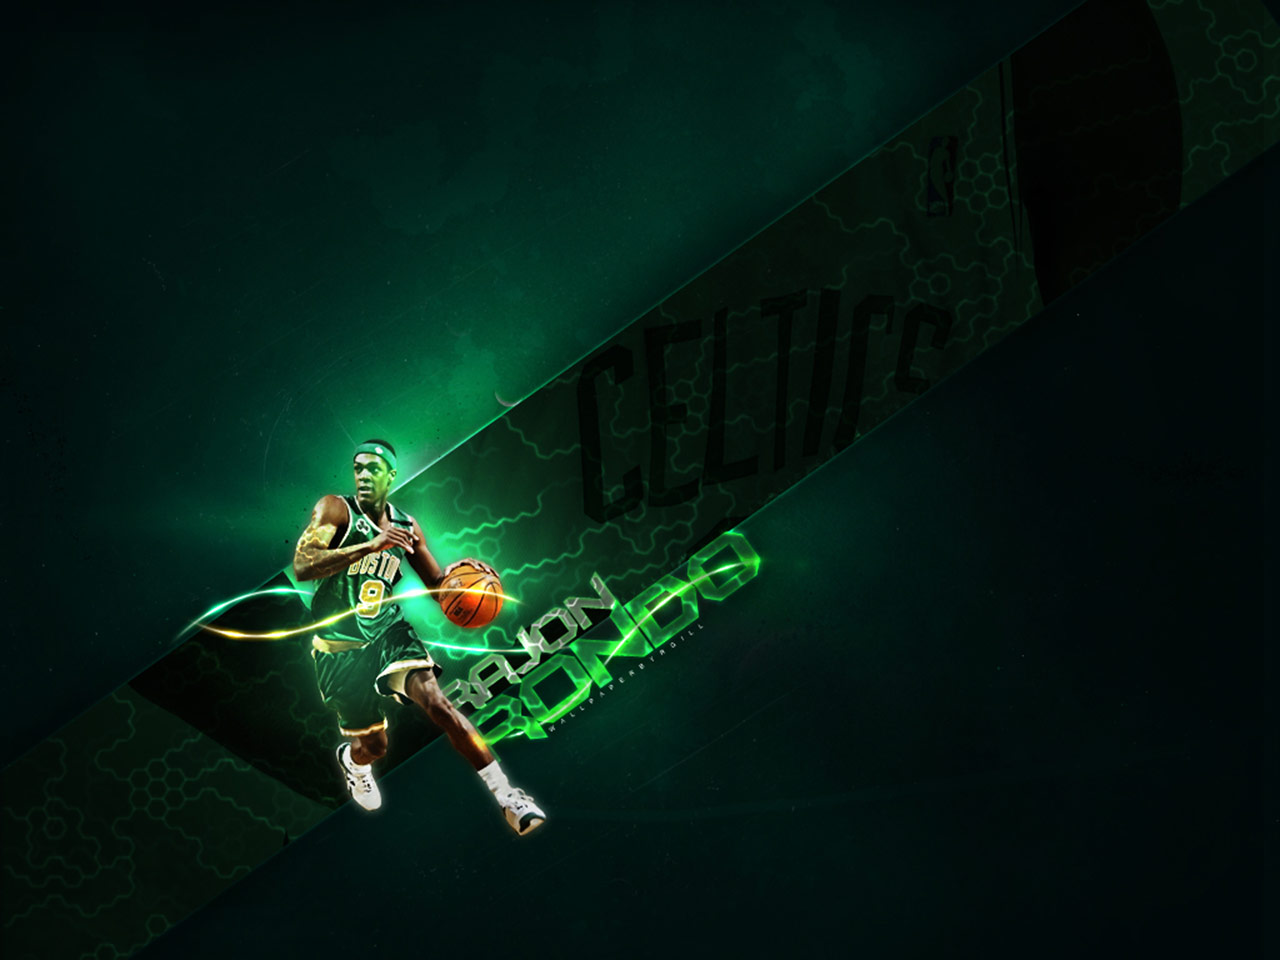 Celtics Rondo